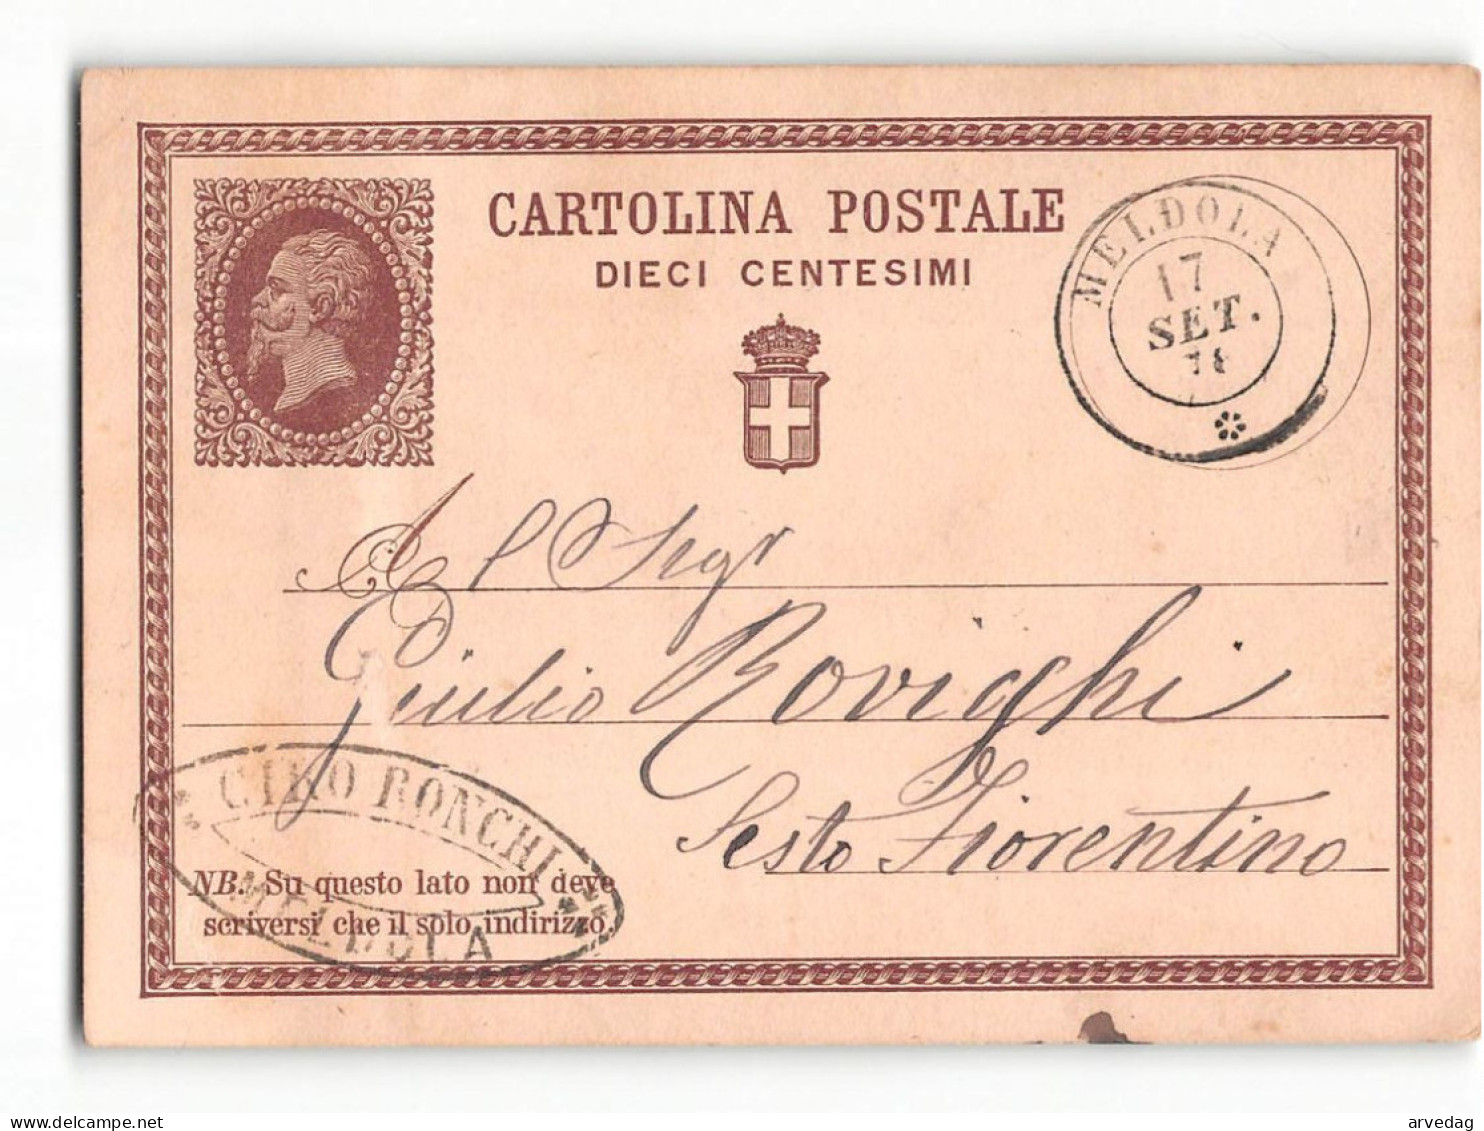 17948 01 CARTOLINA POSTALE 10 CENT - CIRO RONCHI MELDOLA X SESTO FIORENTINO - 1876 - Interi Postali